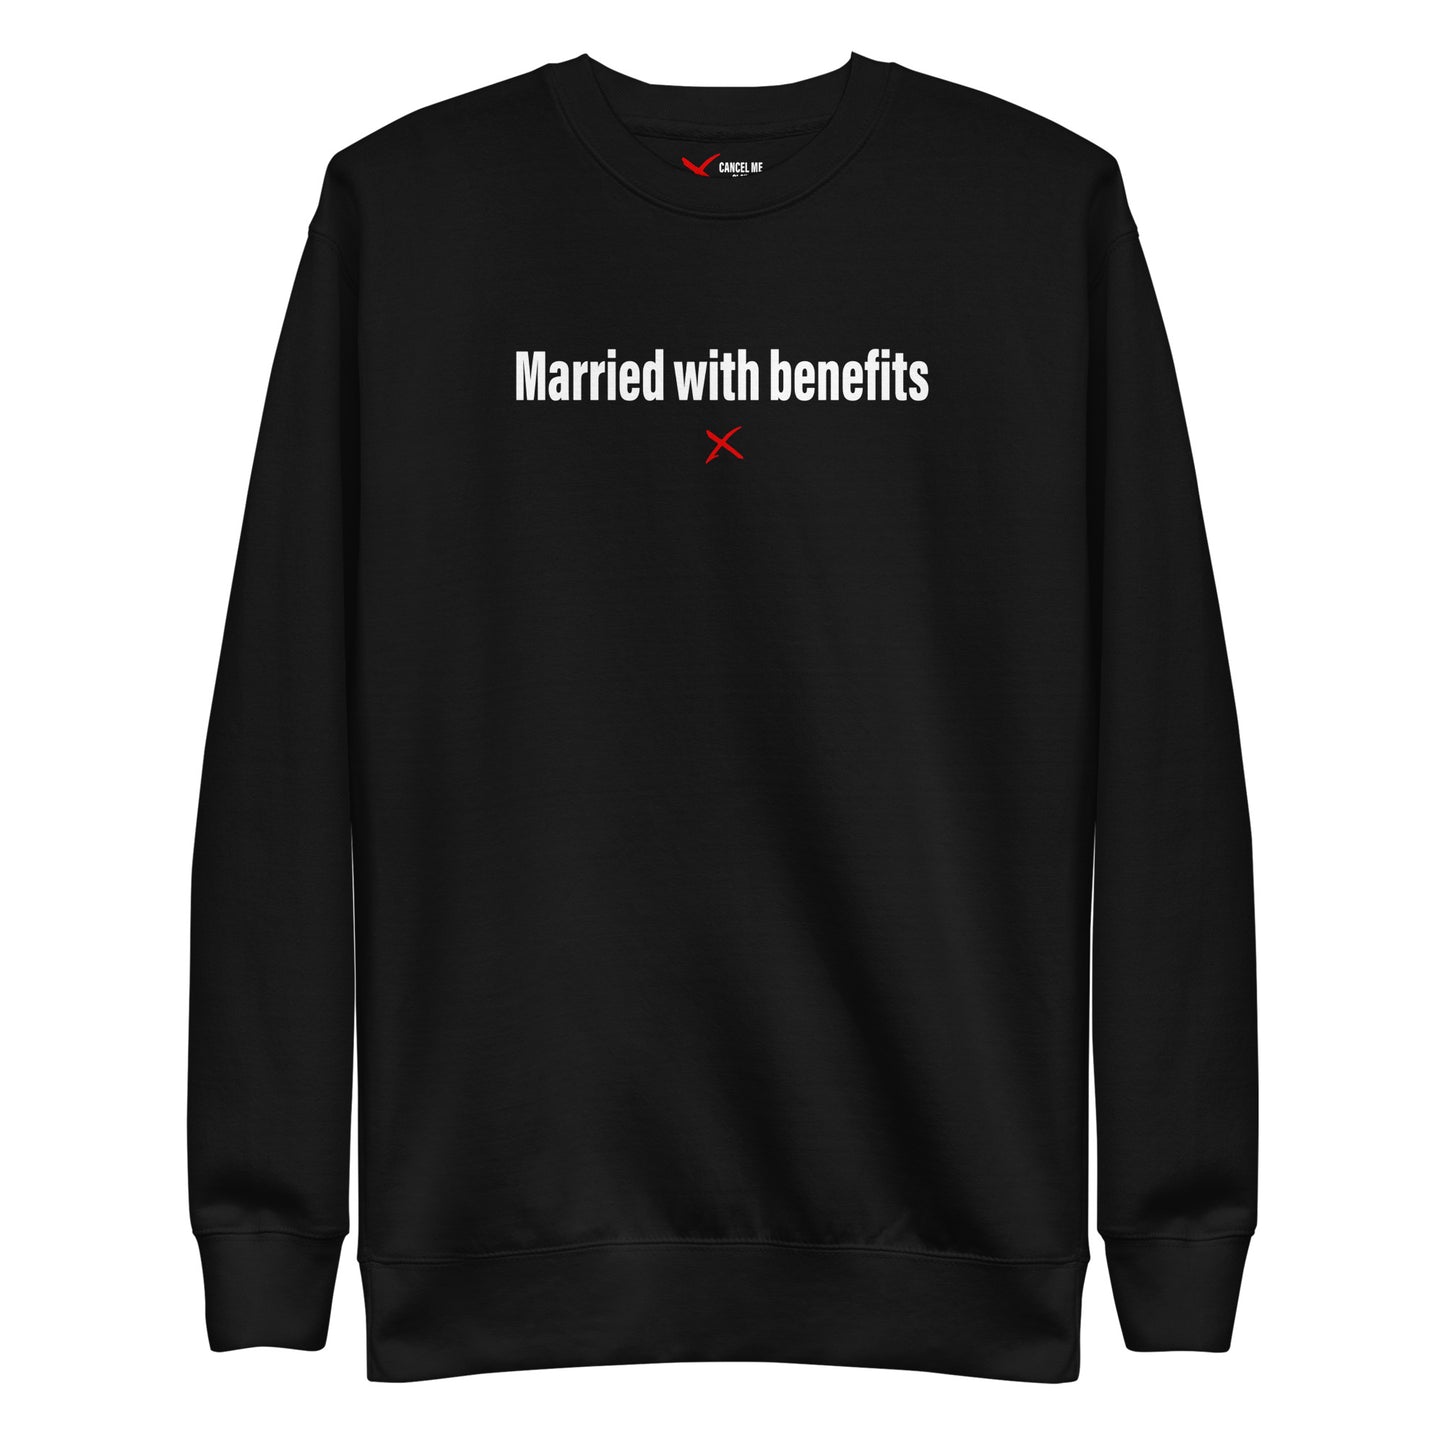 Married with benefits - Sweatshirt